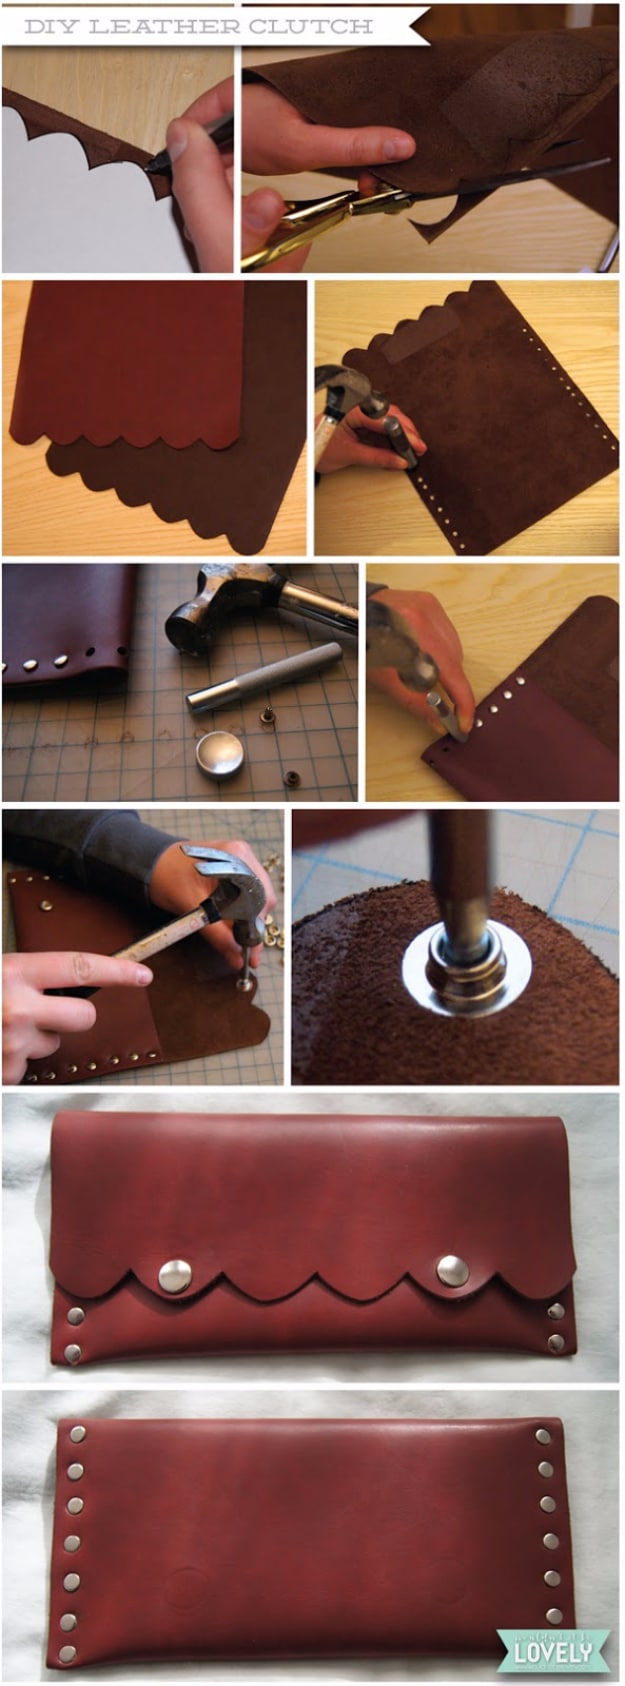 73 Vinyl / leather crafts ideas  leather, leather craft, leather diy